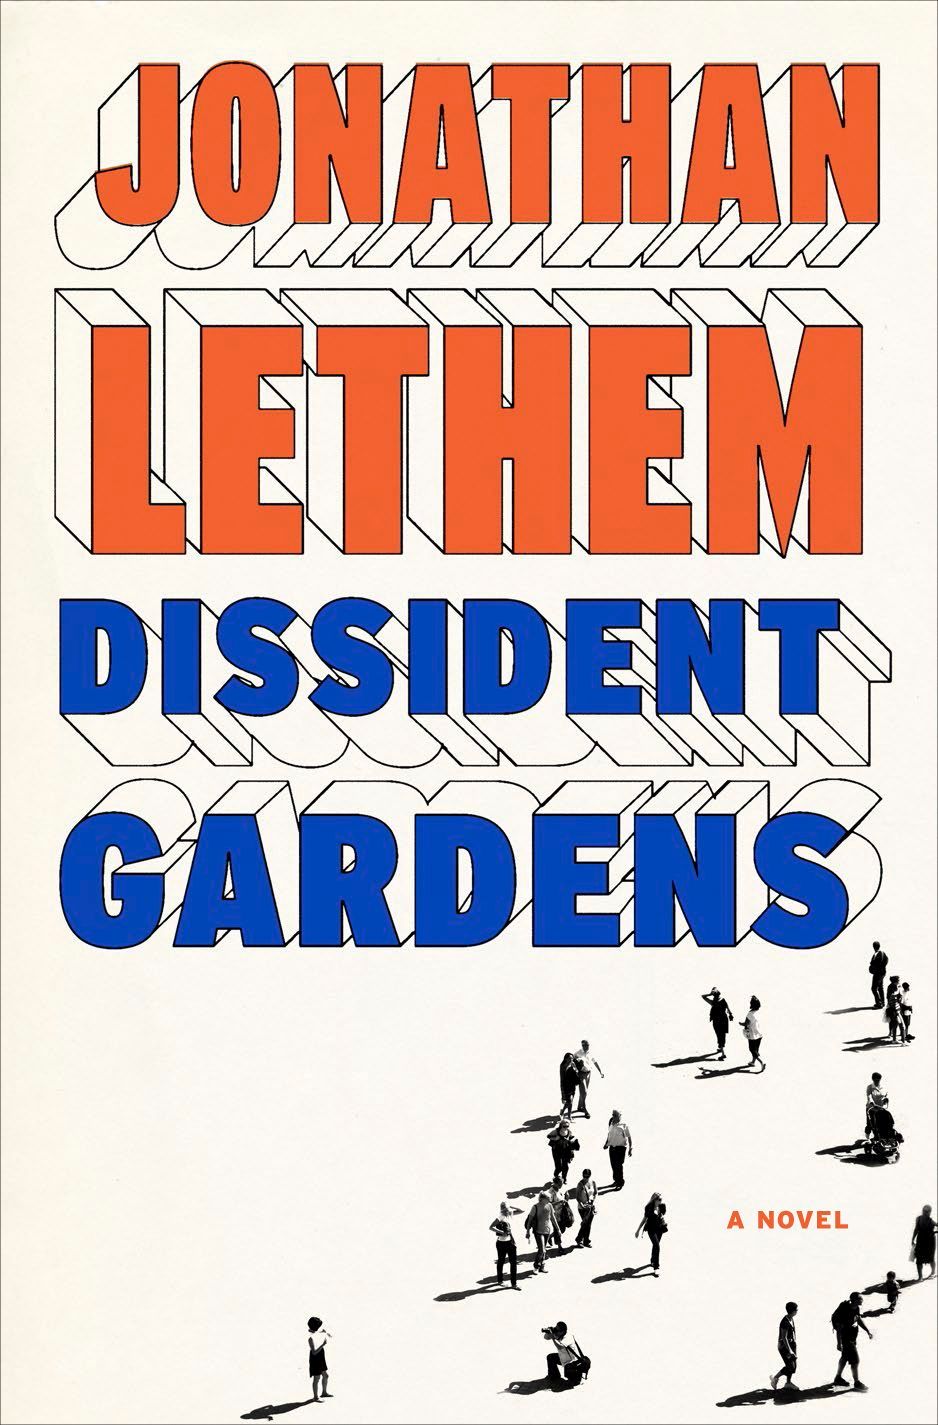 Outborough Destiny: Jonathan Lethem’s “Dissident Gardens”